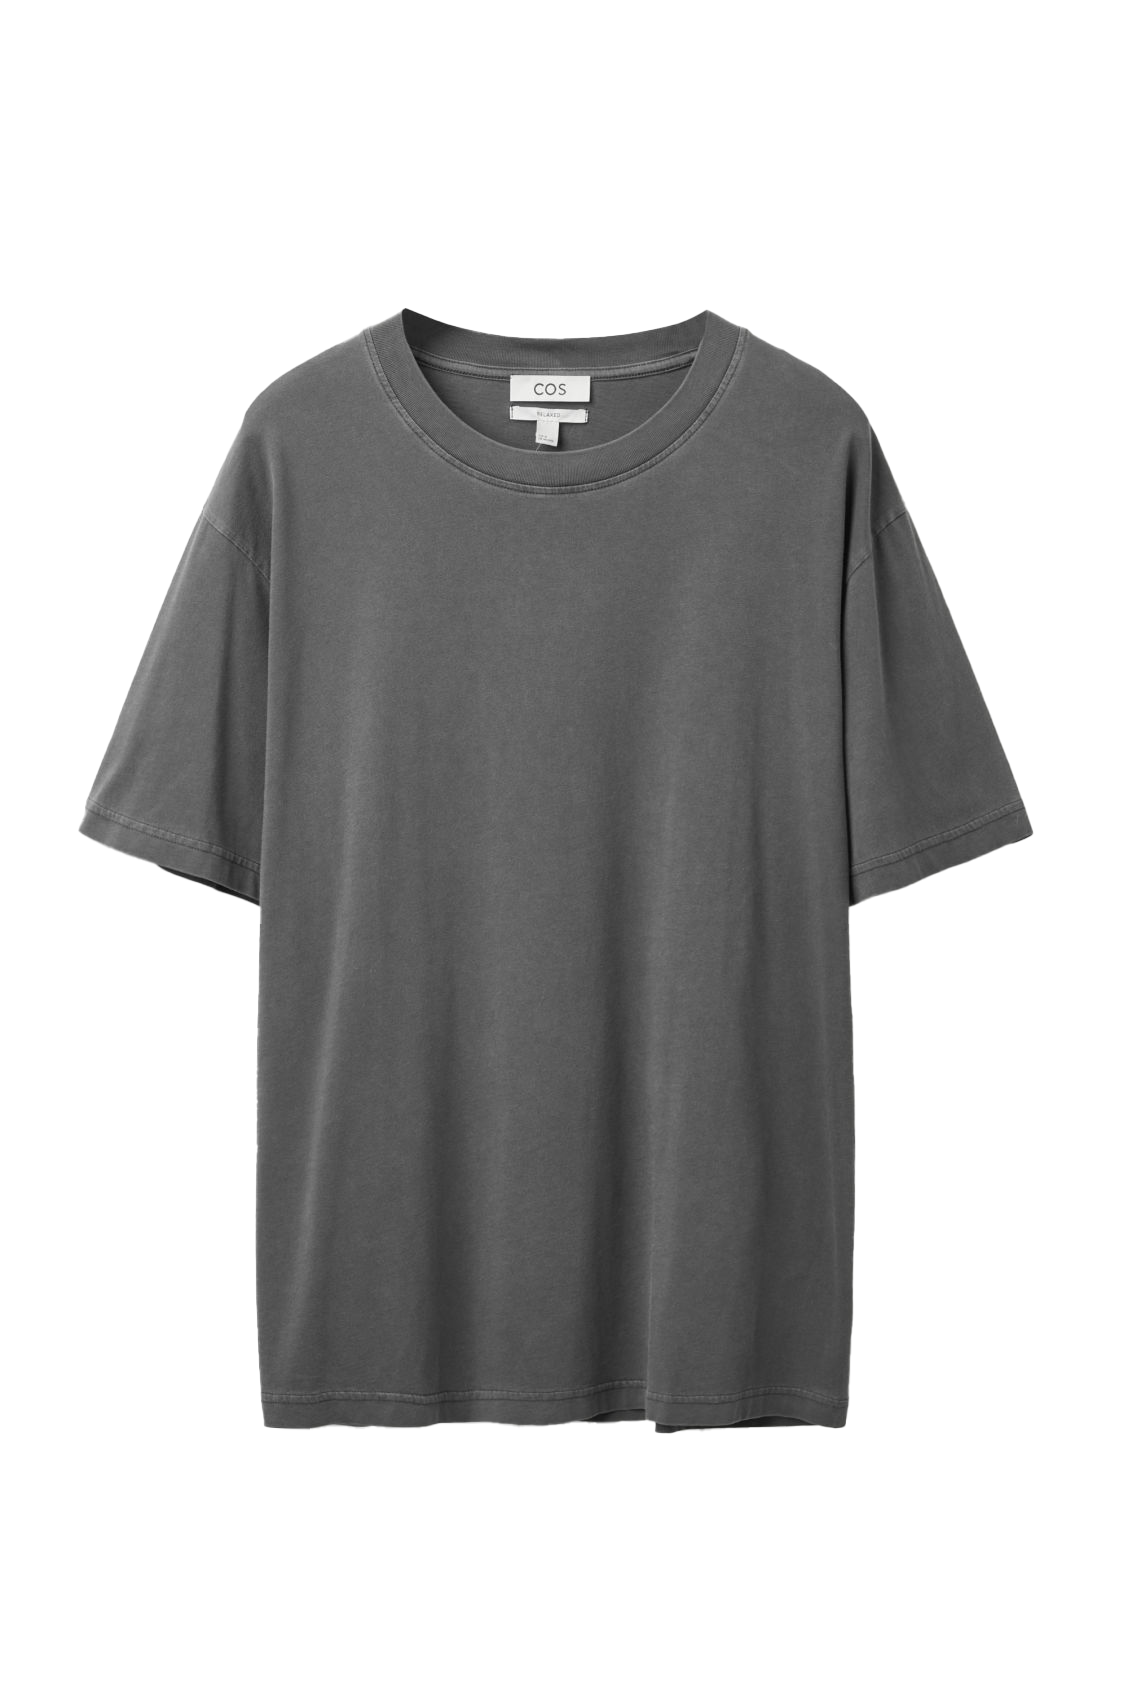 Cos Blank Oversized T-Shirt